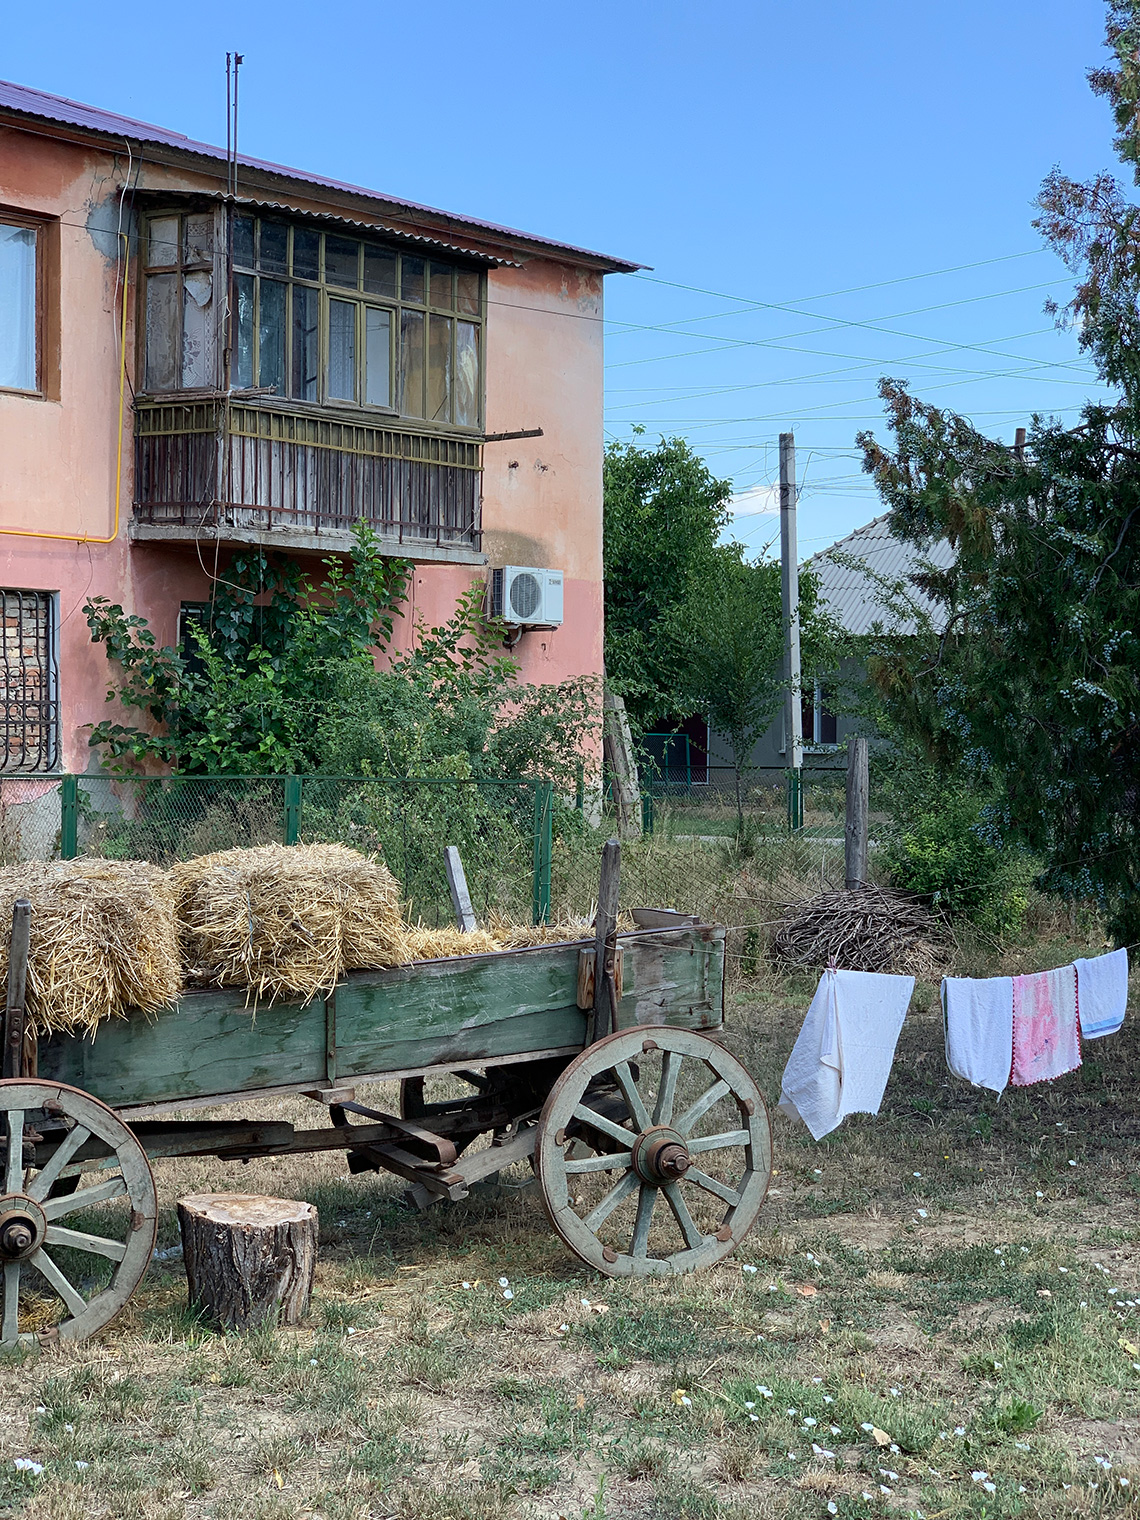 Bessarabian village. “Balkans Yastia”. Сooking masterclass for adults in Odessa.